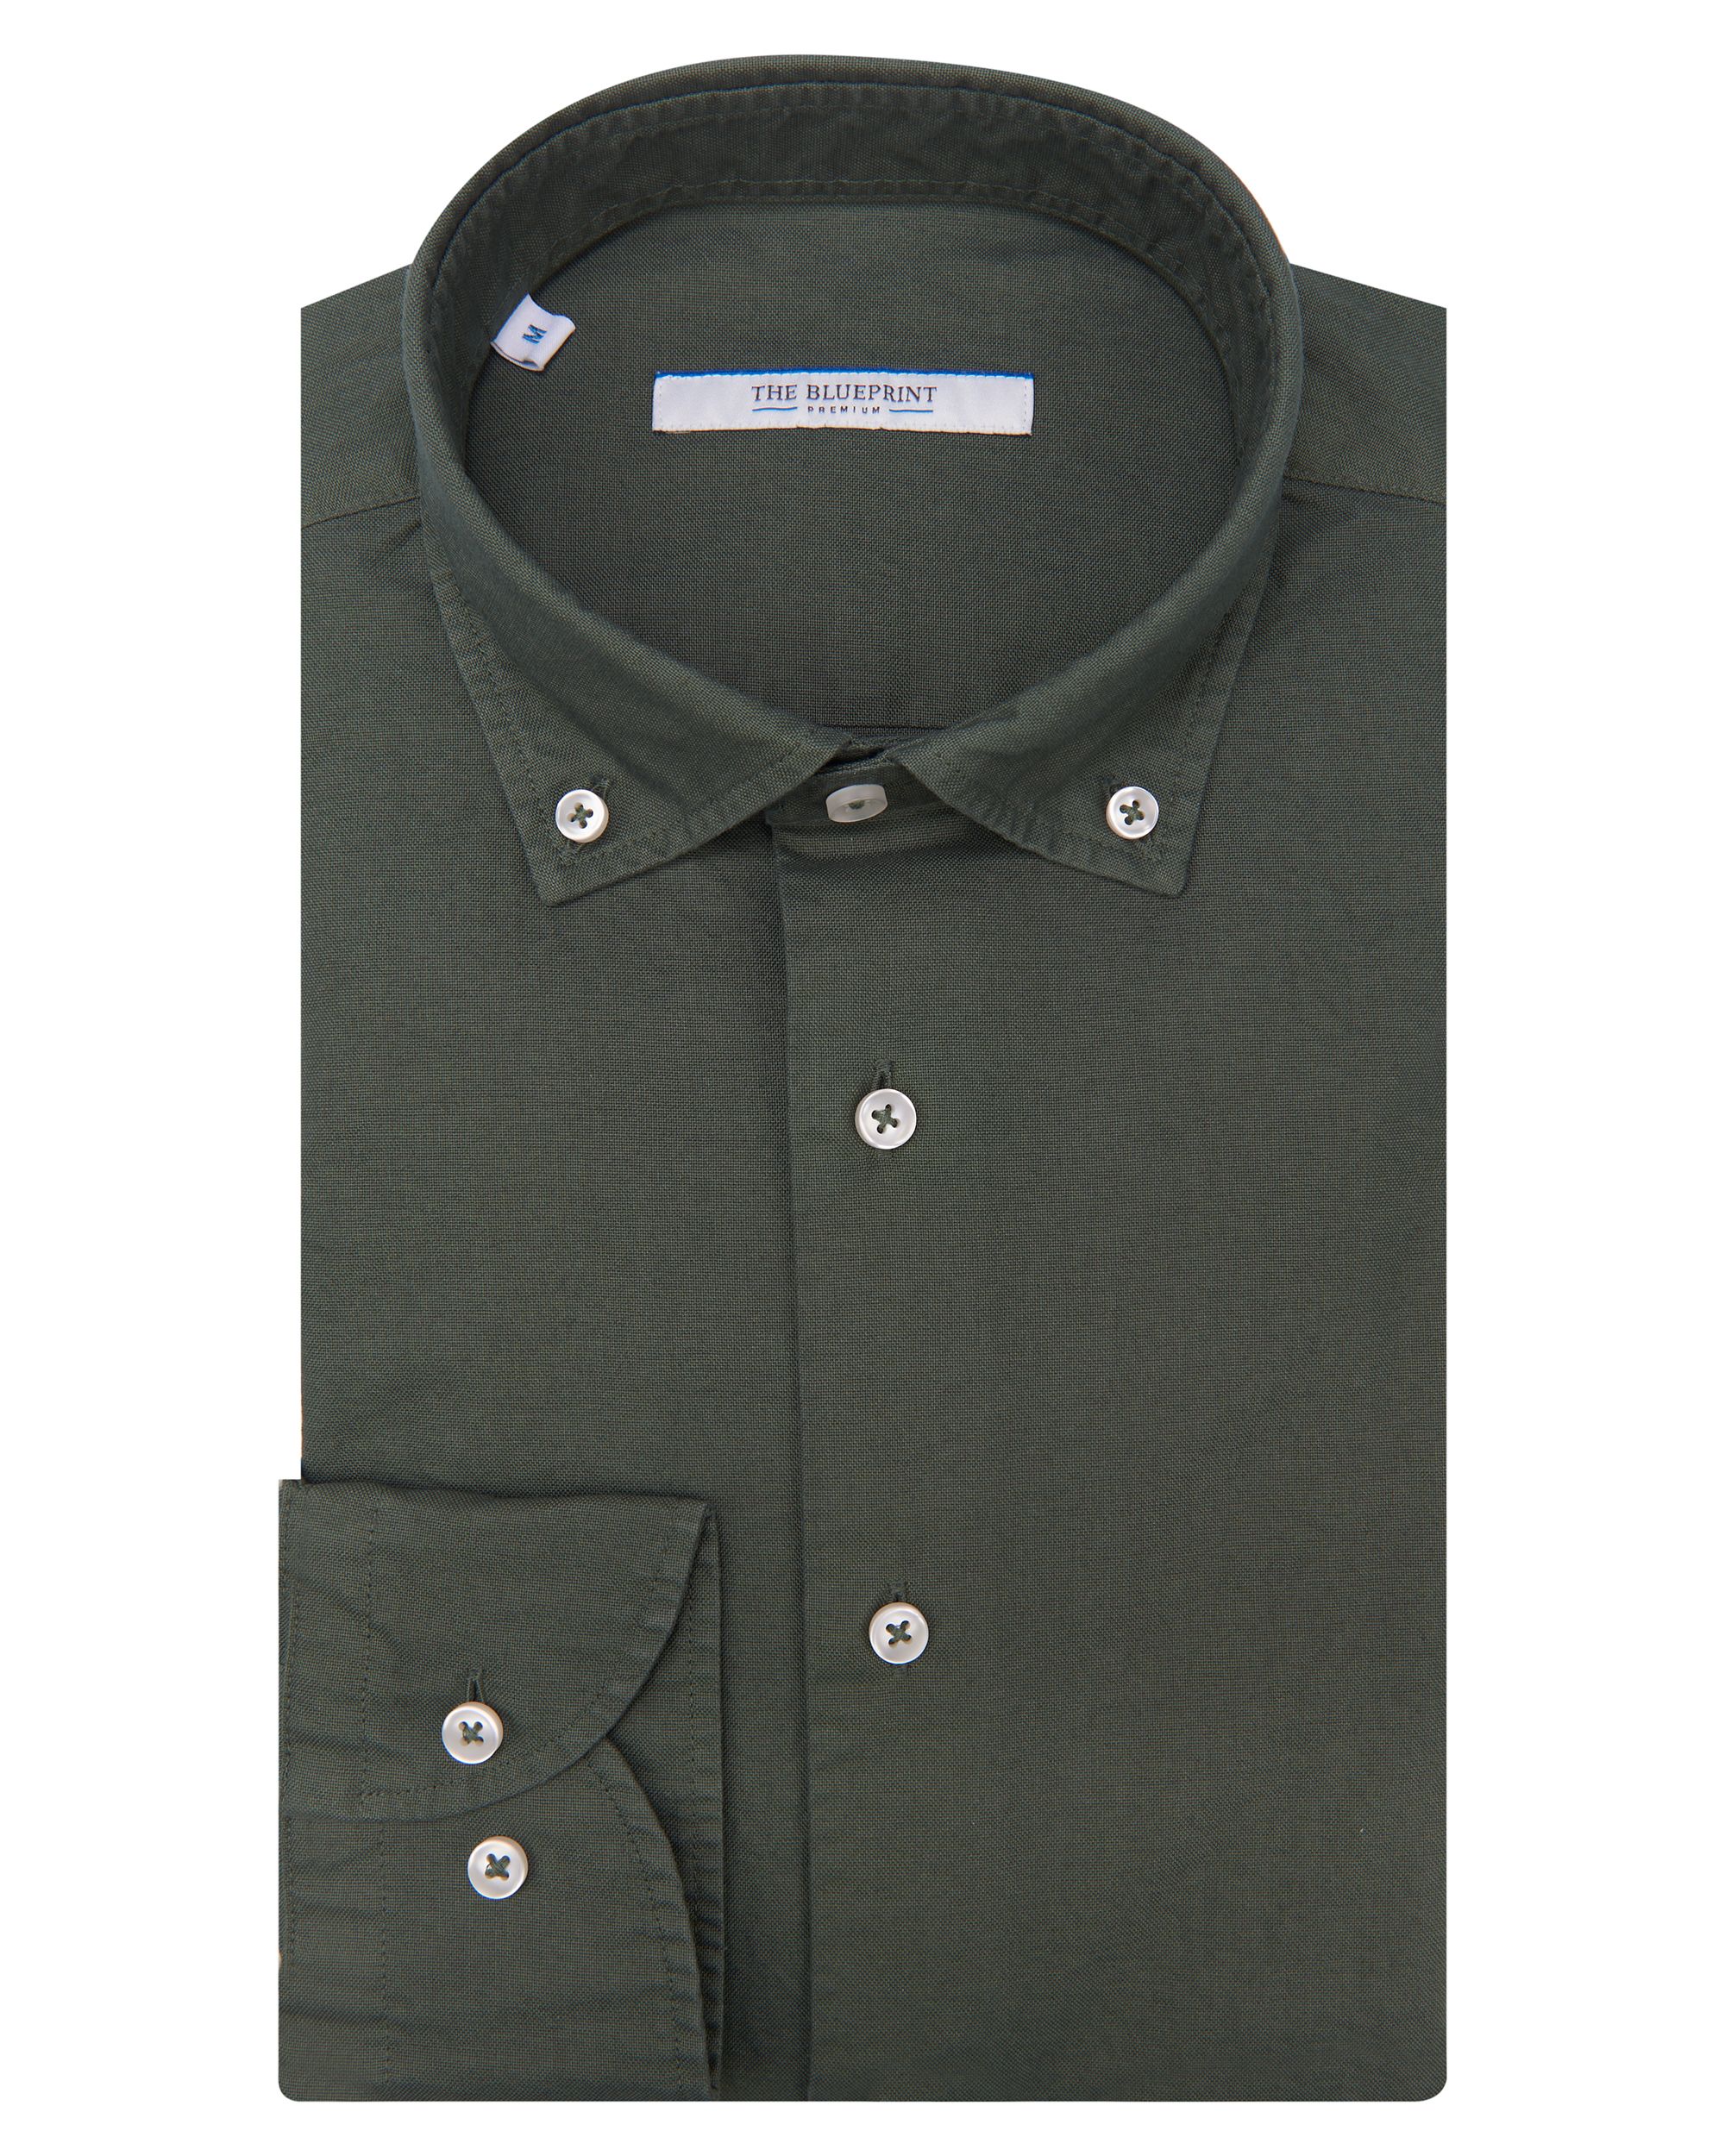 The BLUEPRINT Premium Trendy Overhemd LM Flessengroen uni 078401-003-L